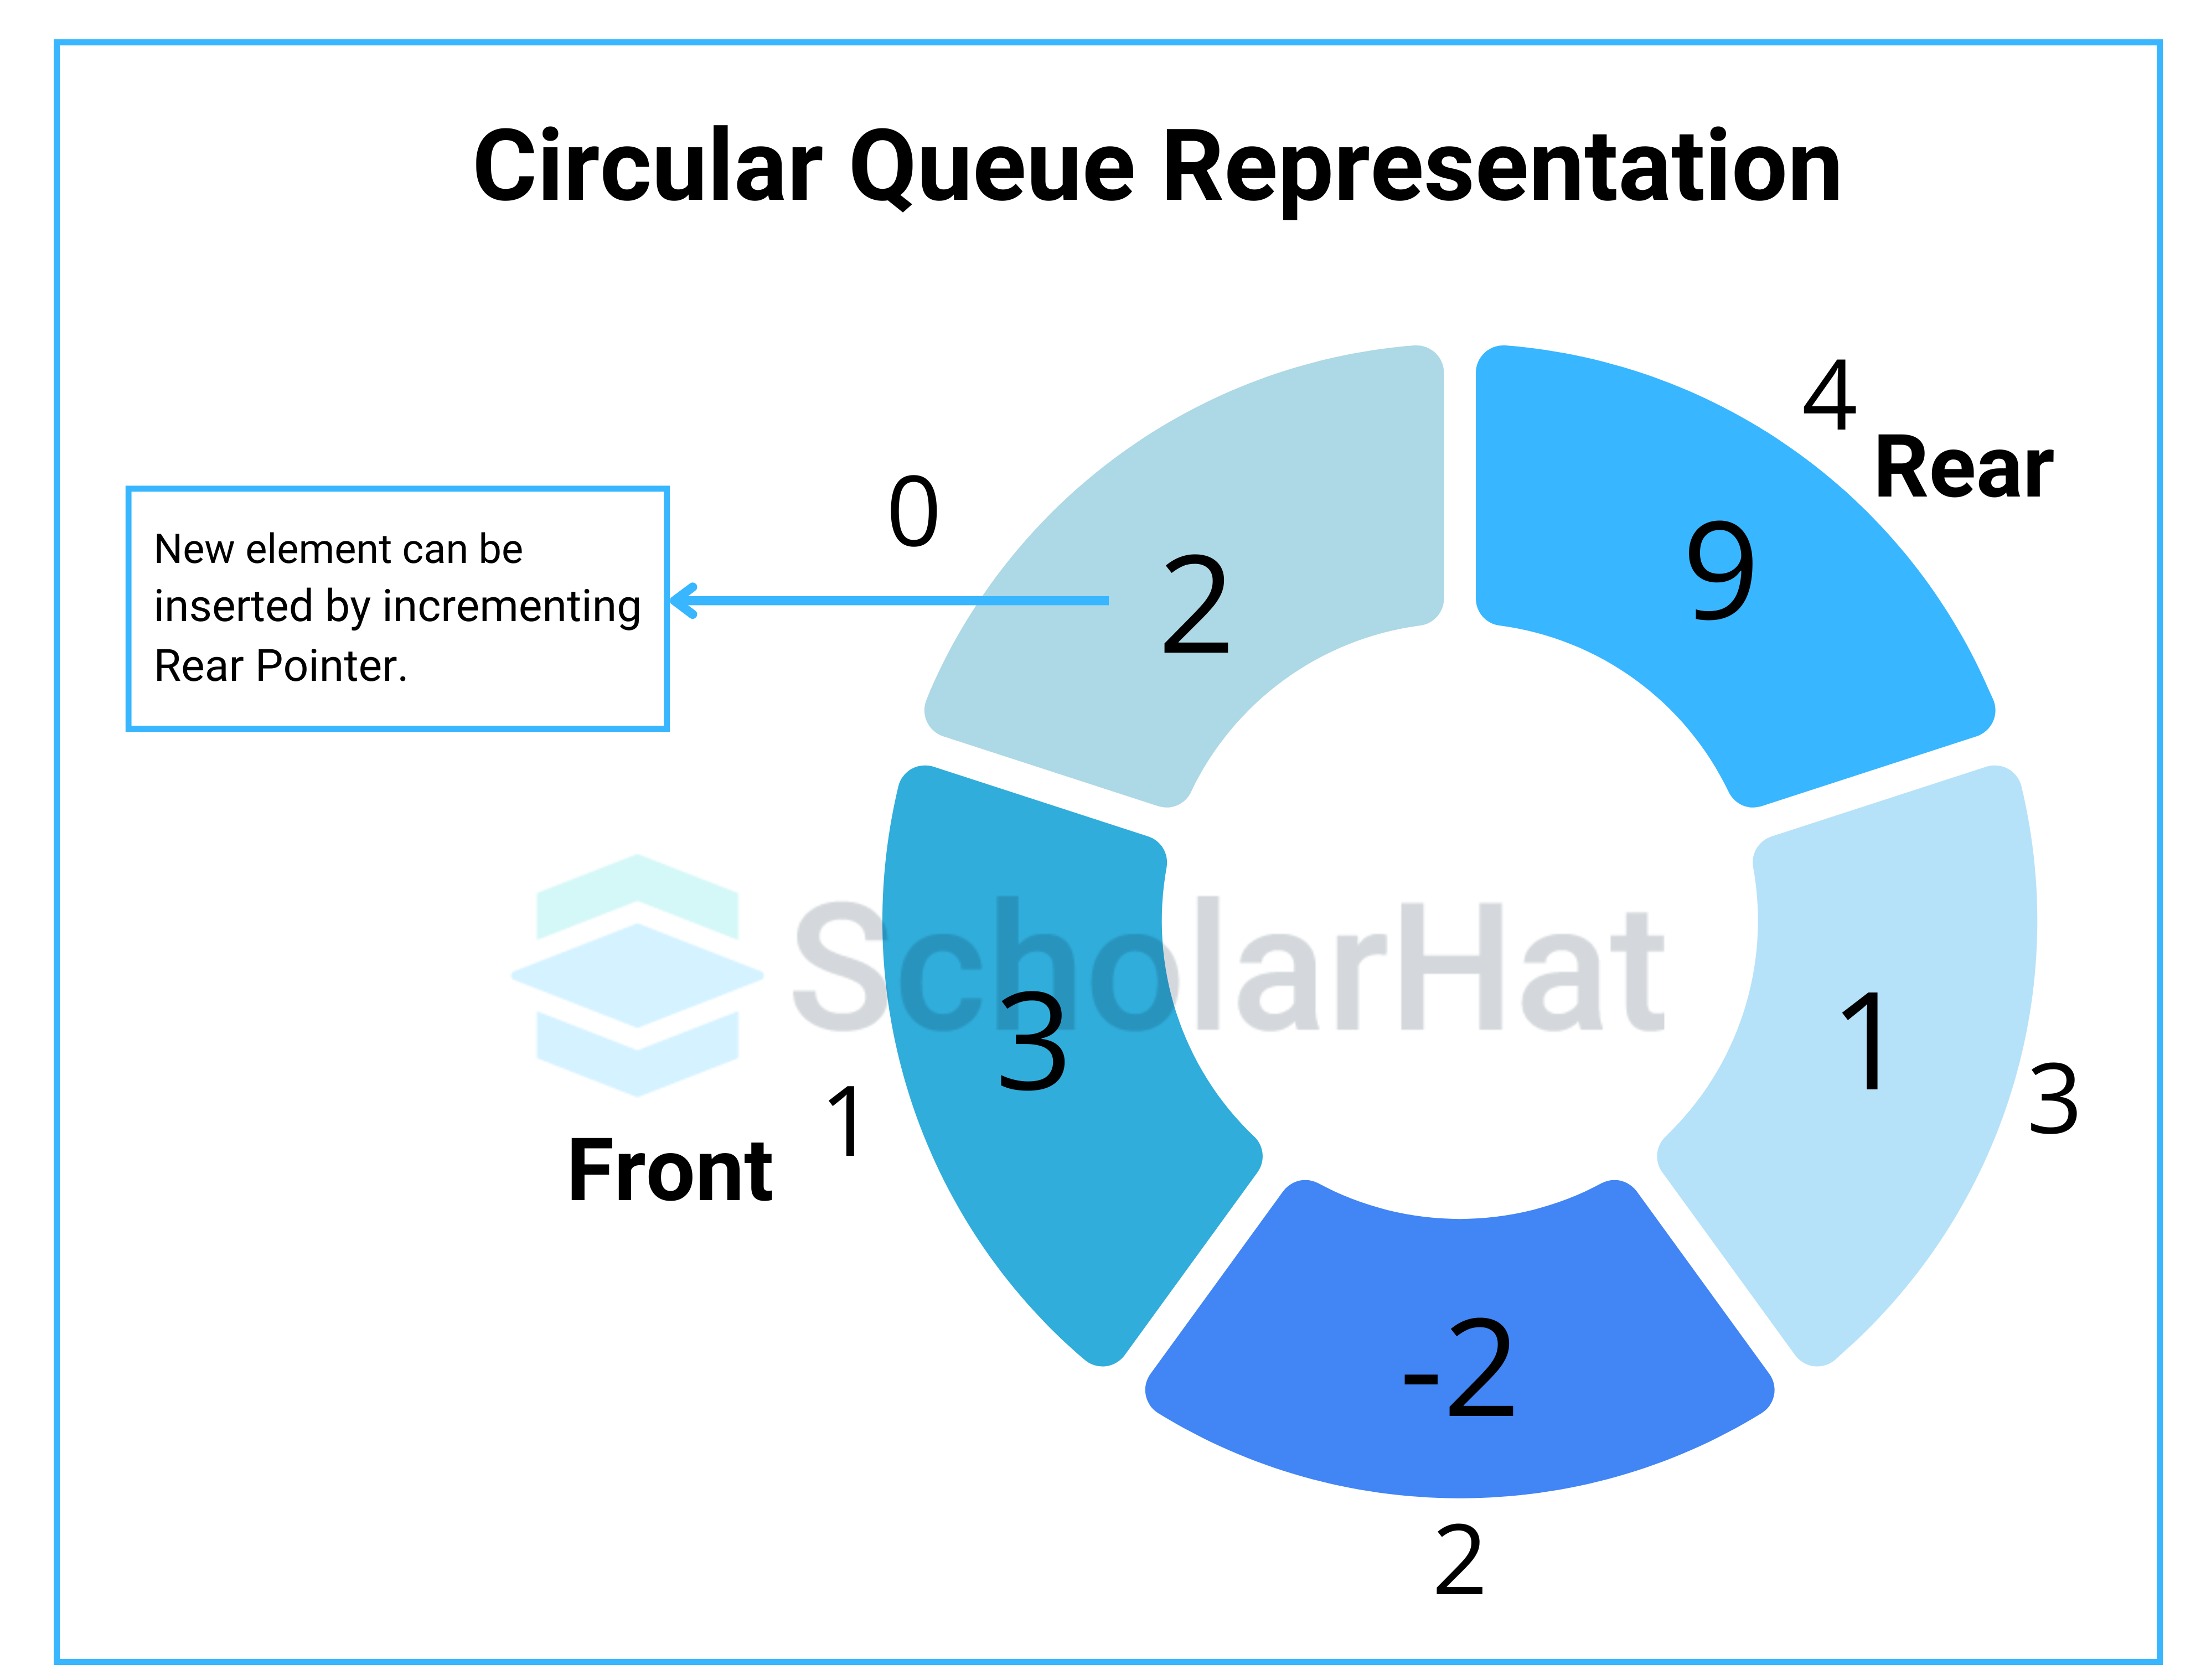 What is Circular Queue